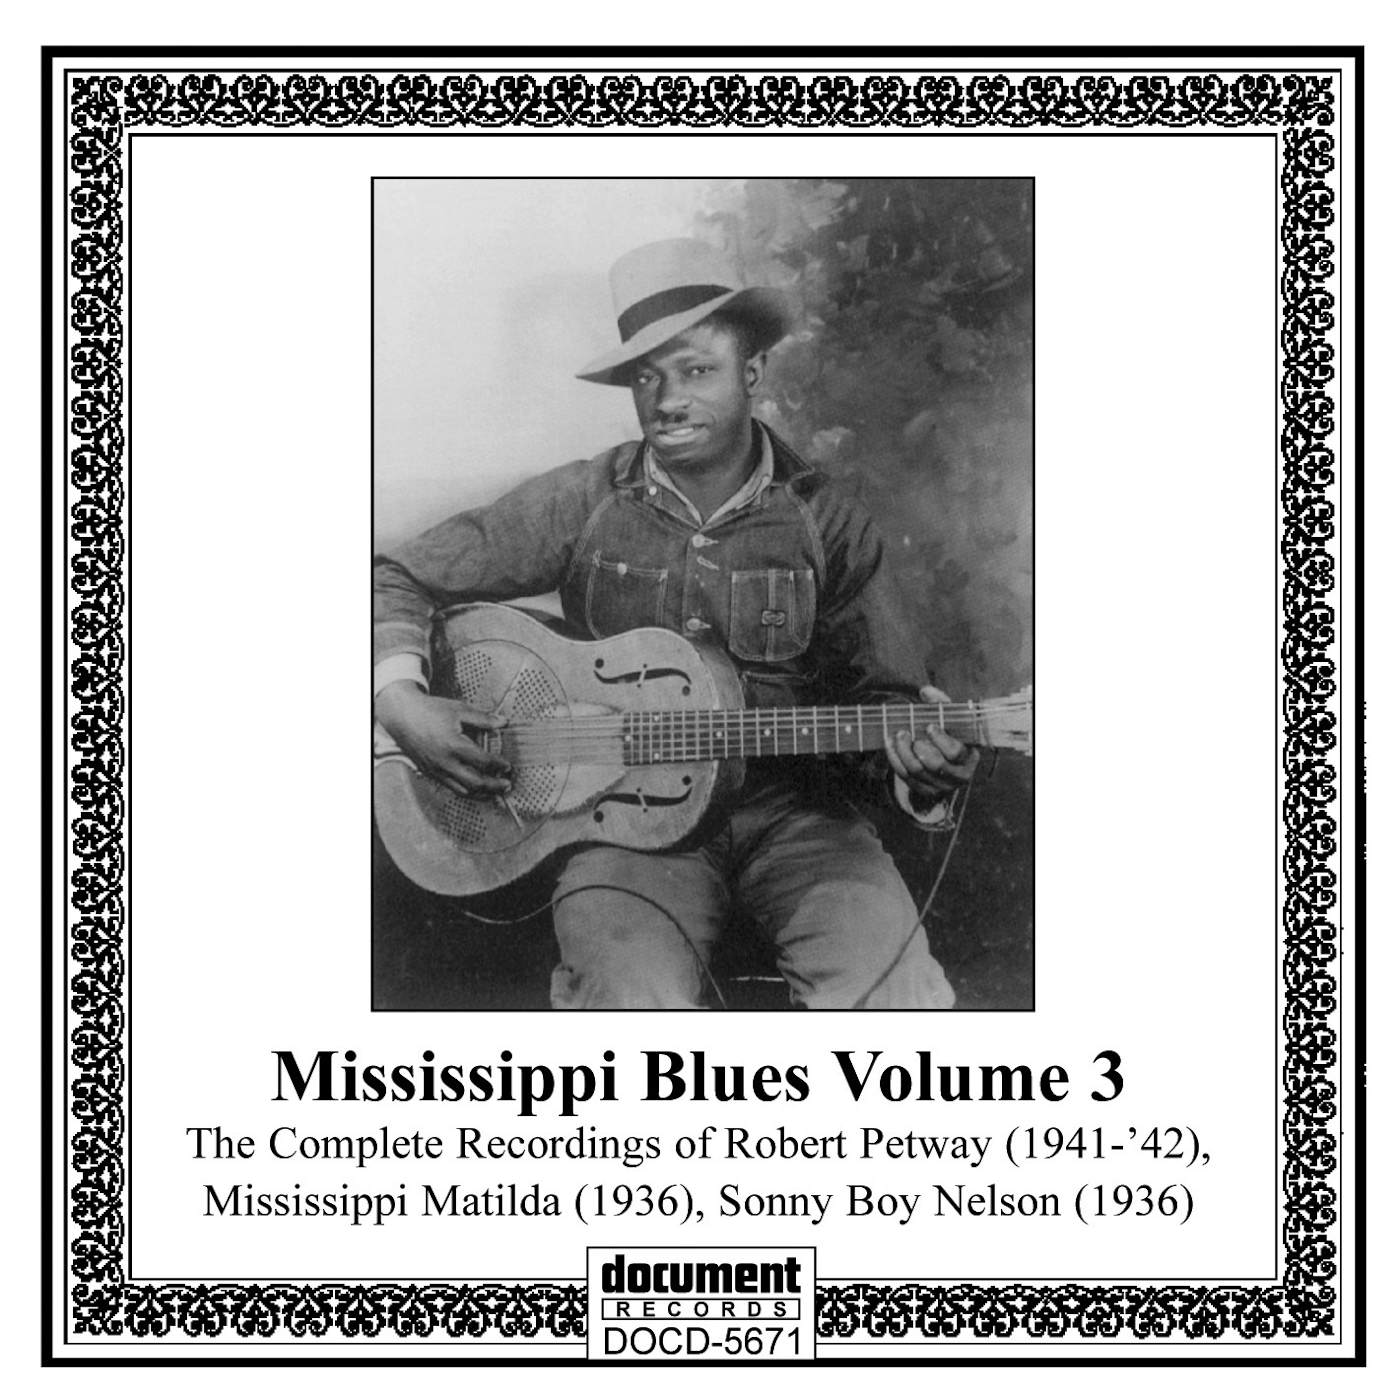 Robert Petway CATFISH BLUES: MISSISSIPPI BLUES 3 (1936-1942) CD